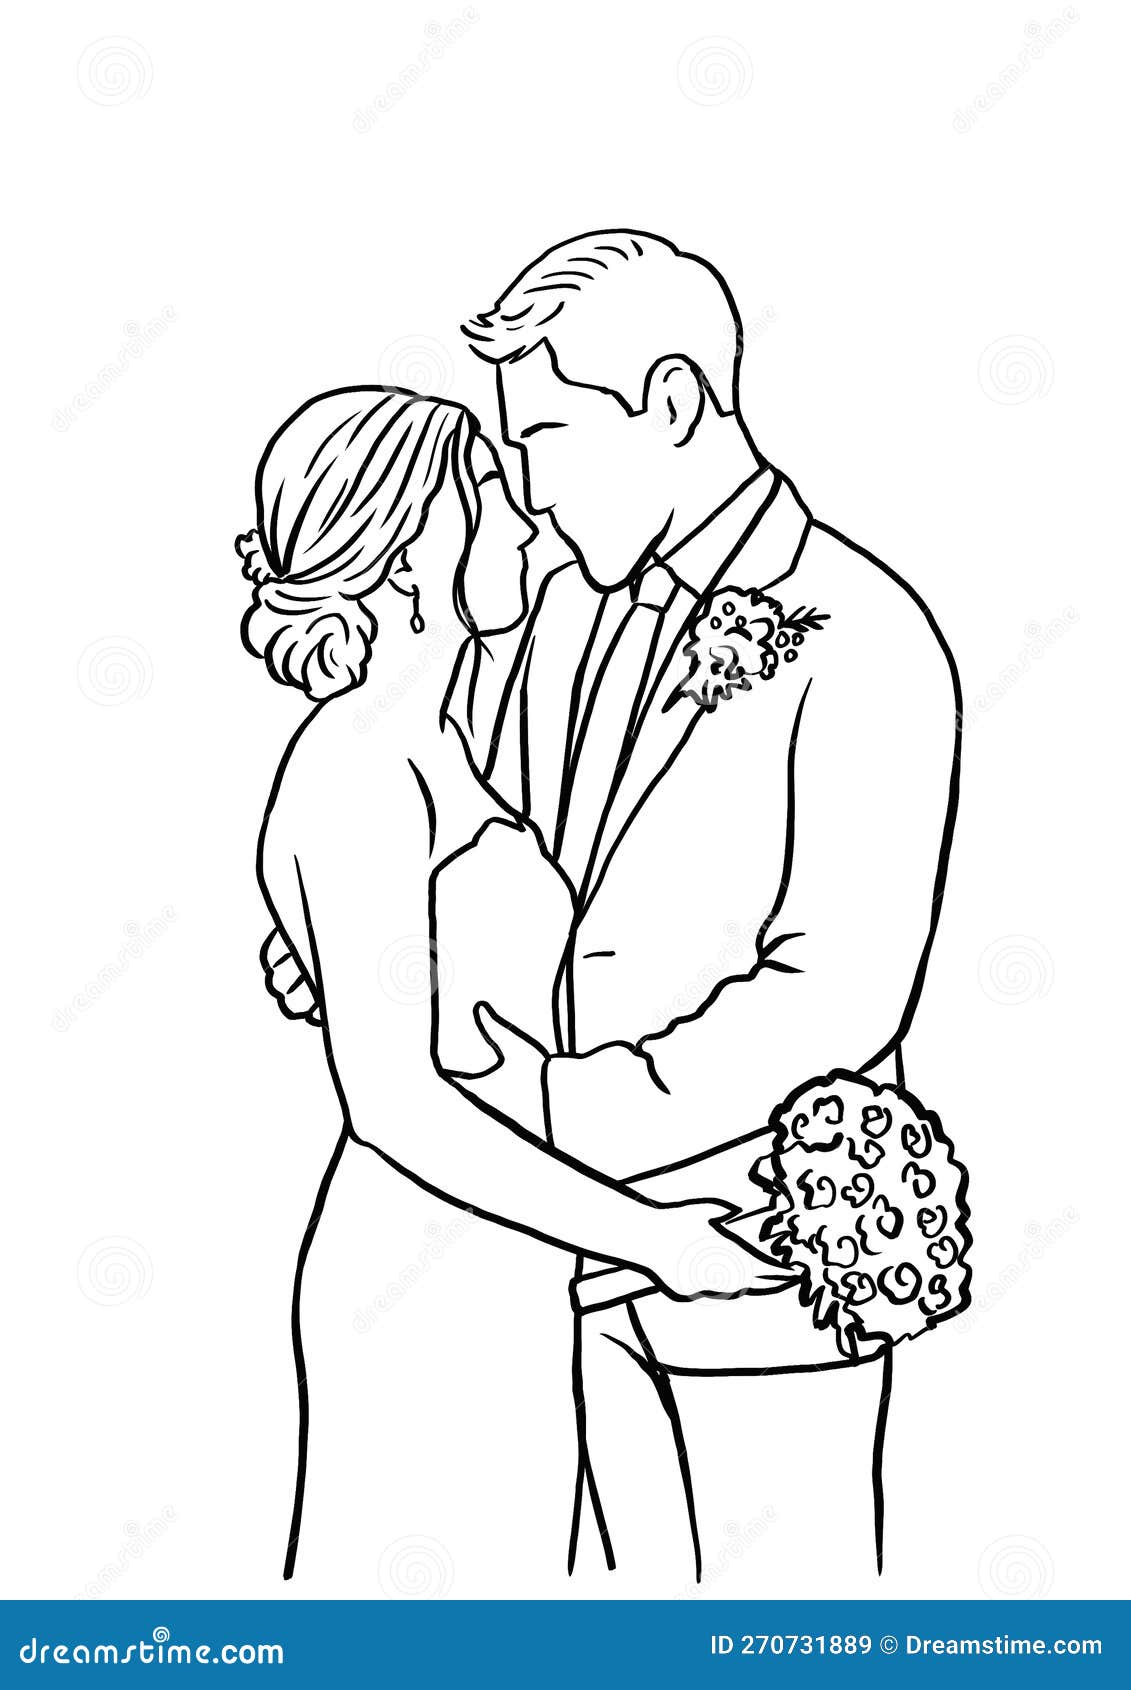 couple wedding on decorative wreath nature cute cartoon vector illustration  graphic design - Stock Image - Everypixel